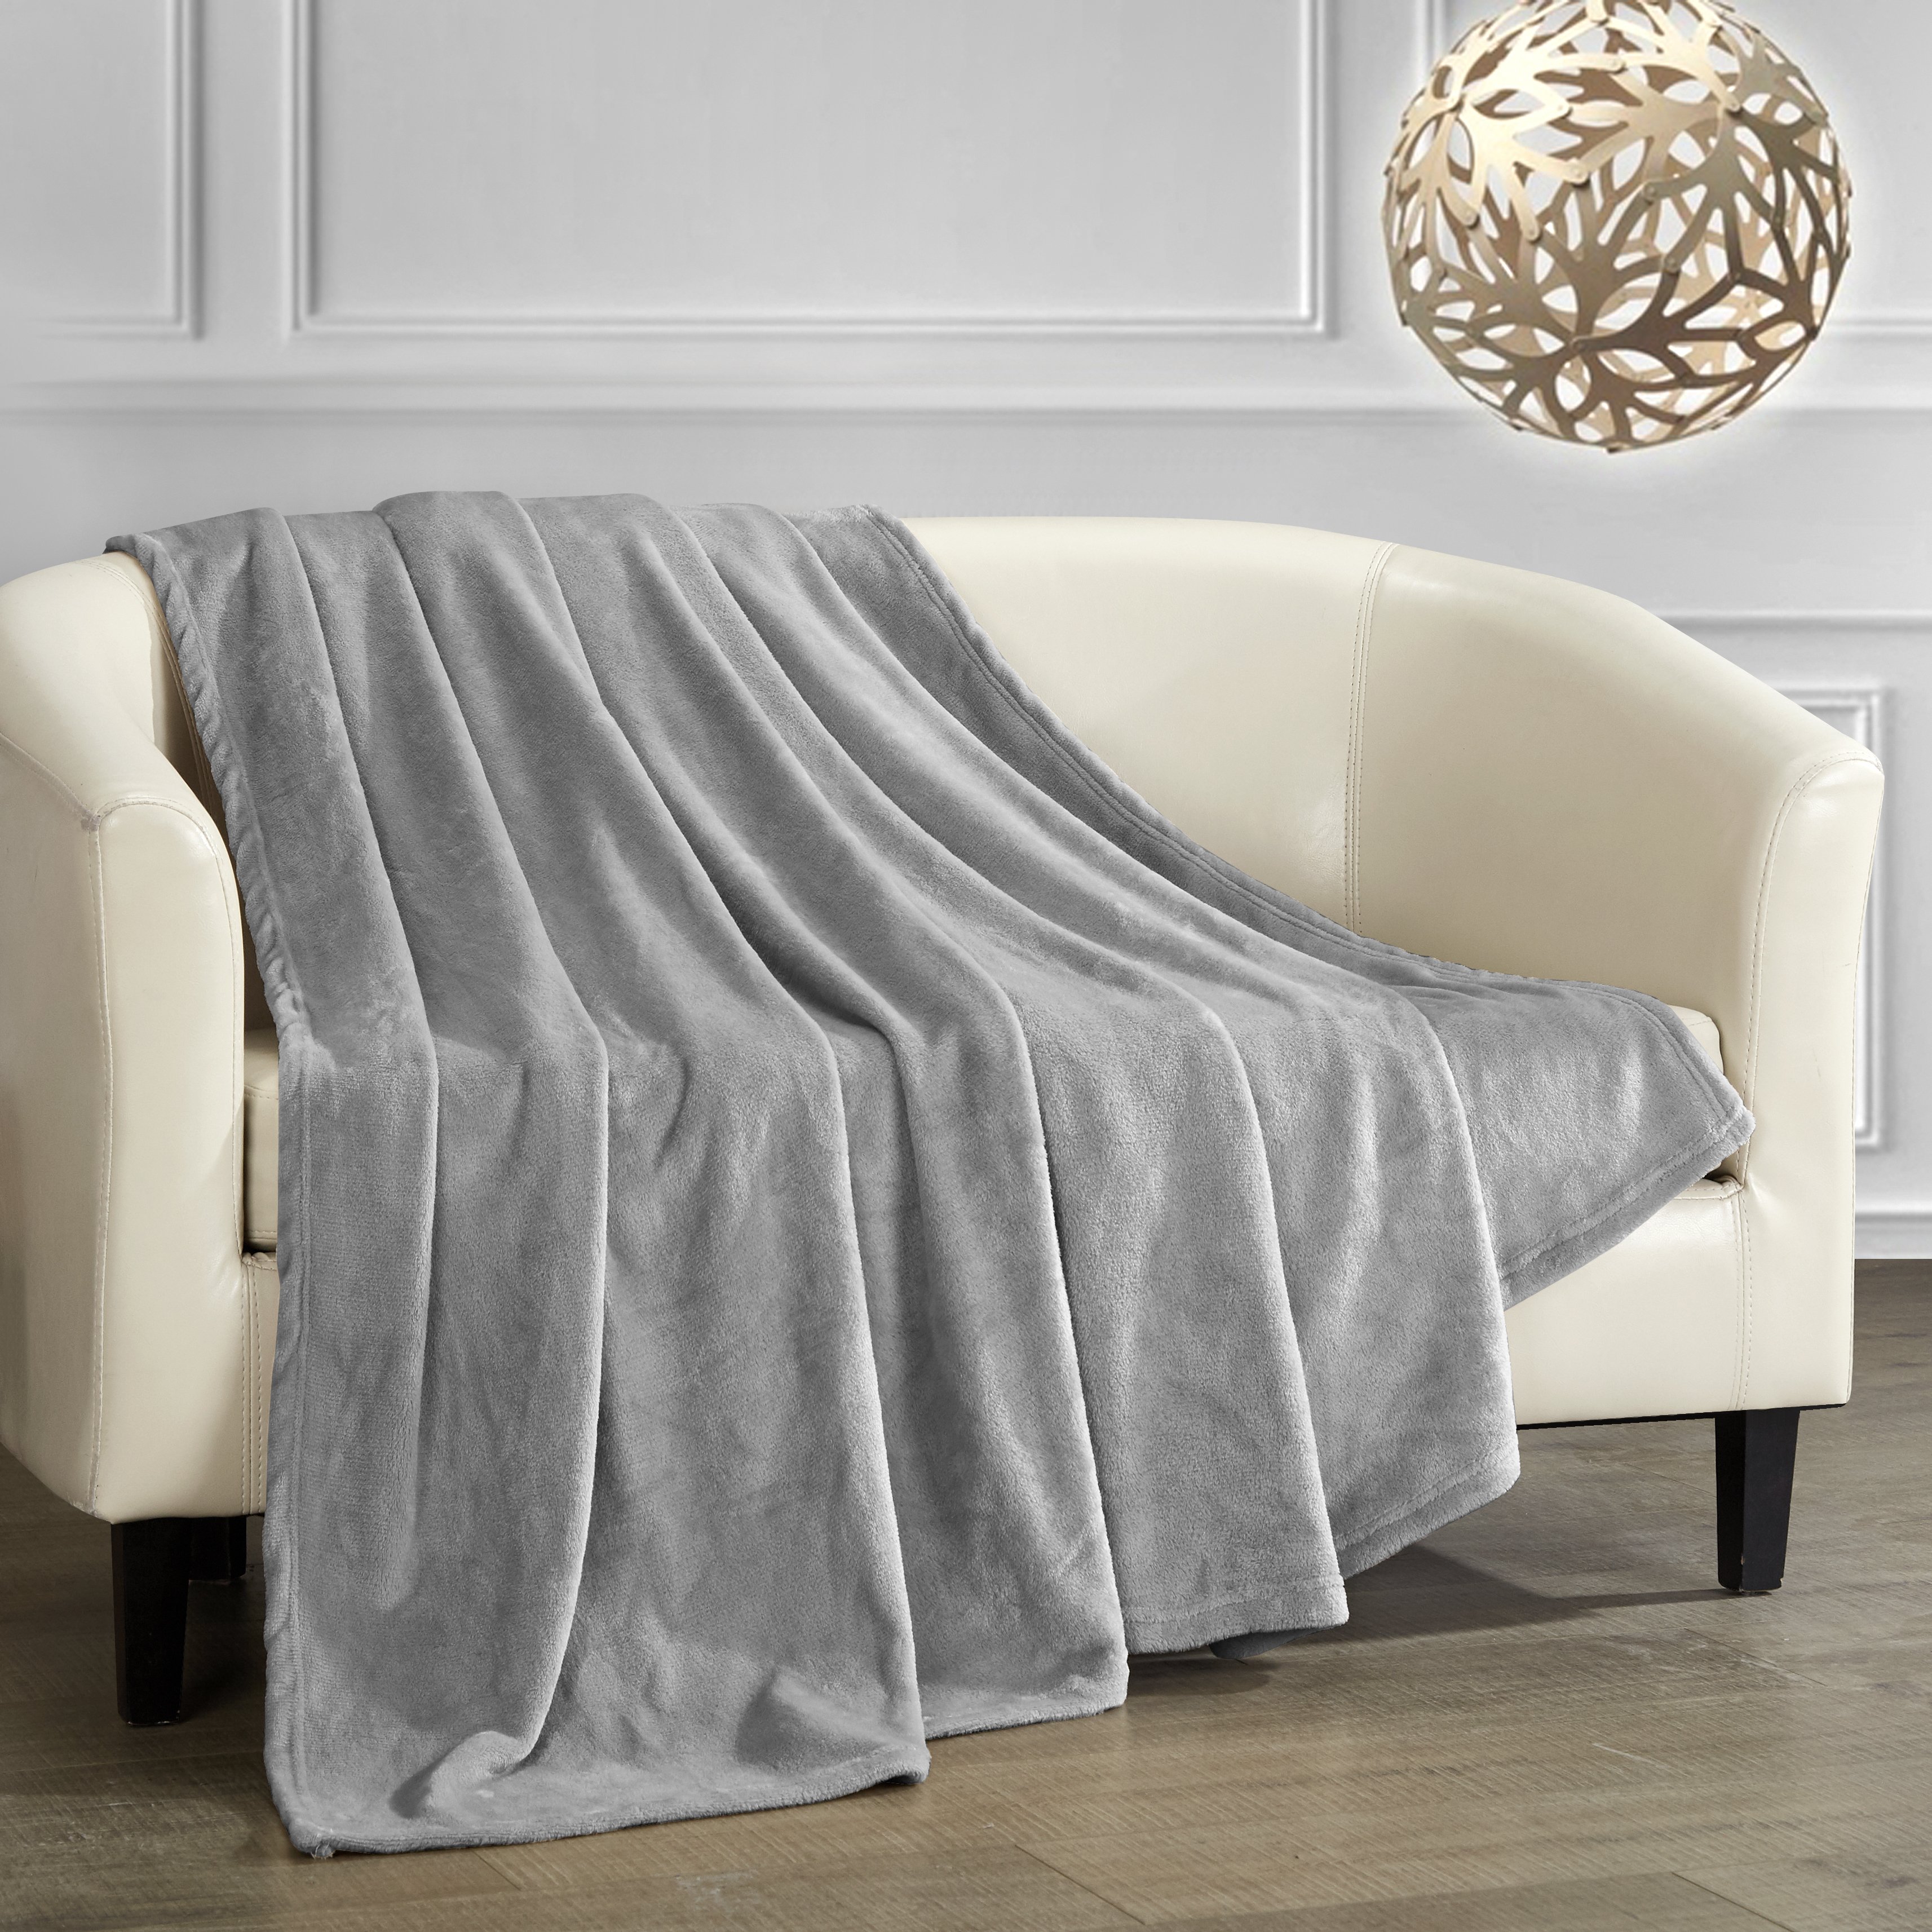 Kaeden Throw Blanket Cozy Super Soft Ultra Plush Micro Mink Fleece Decorative Design - Grey